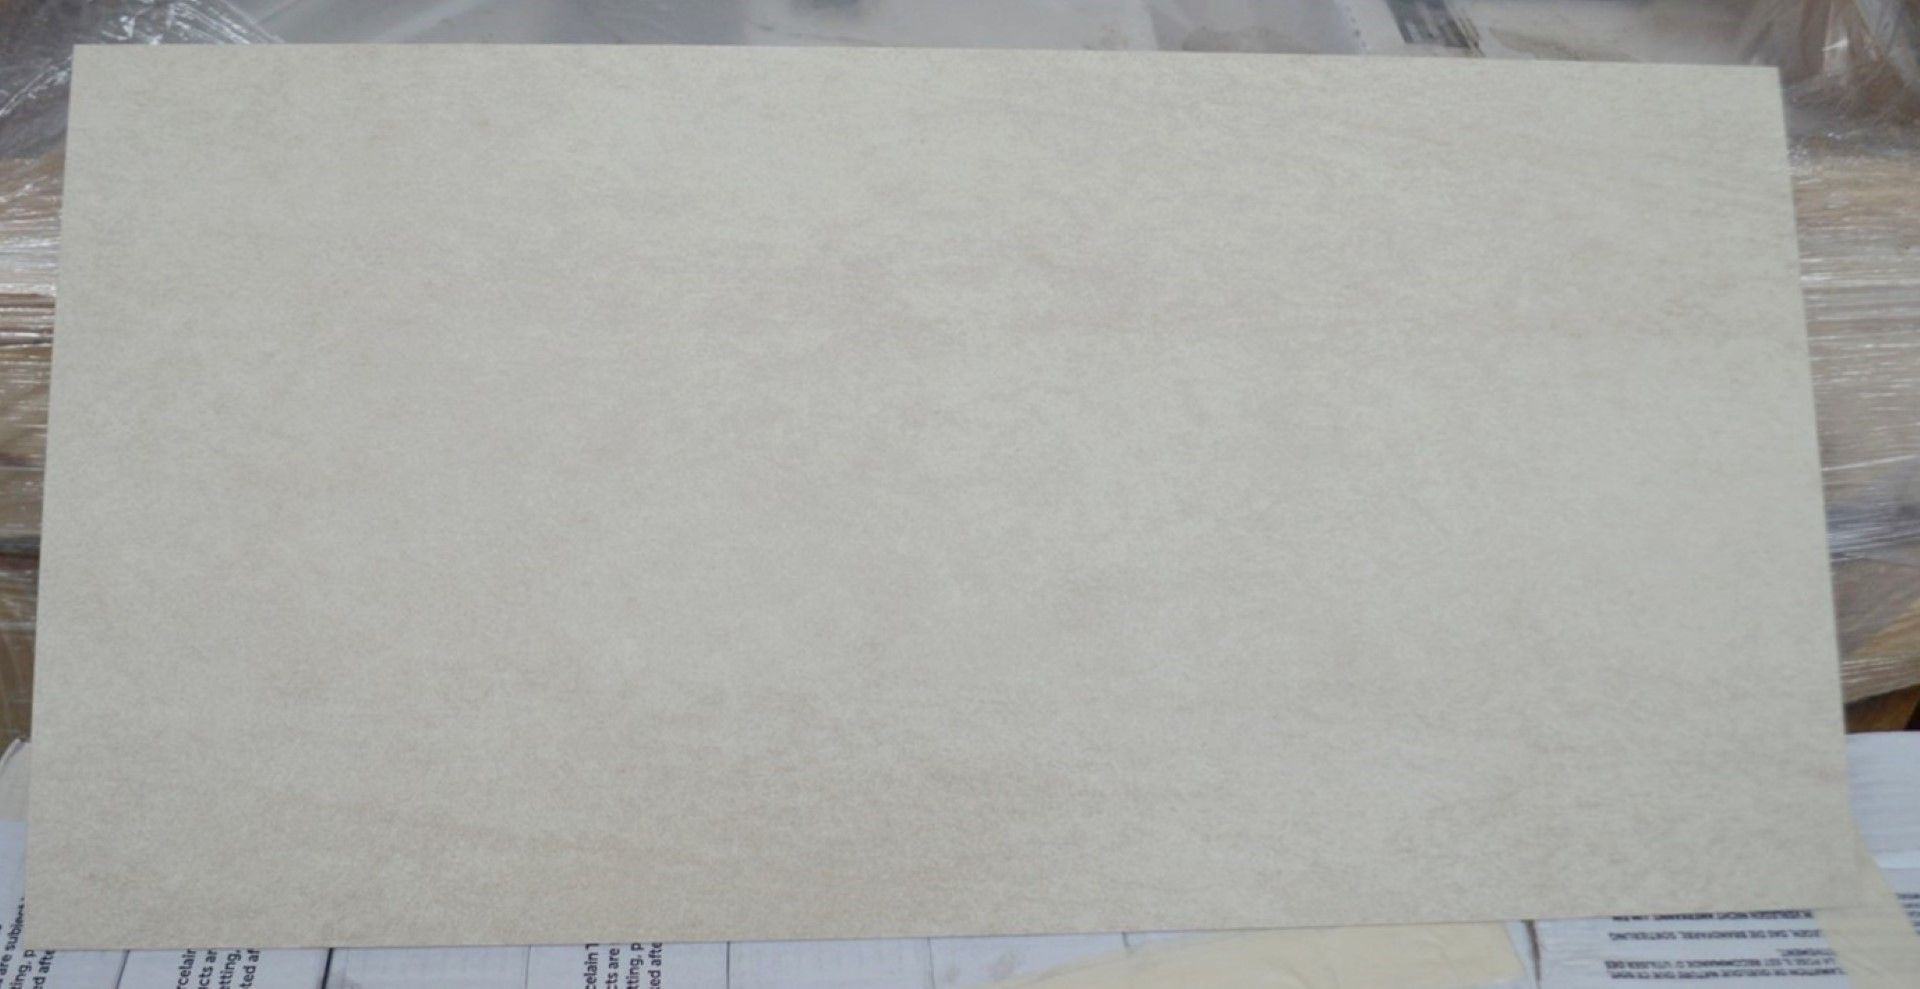 16 x Boxes of RAK Porcelain Floor or Wall Tiles - Concrete Sand Design in Beige - 30 x 60 - Image 6 of 8